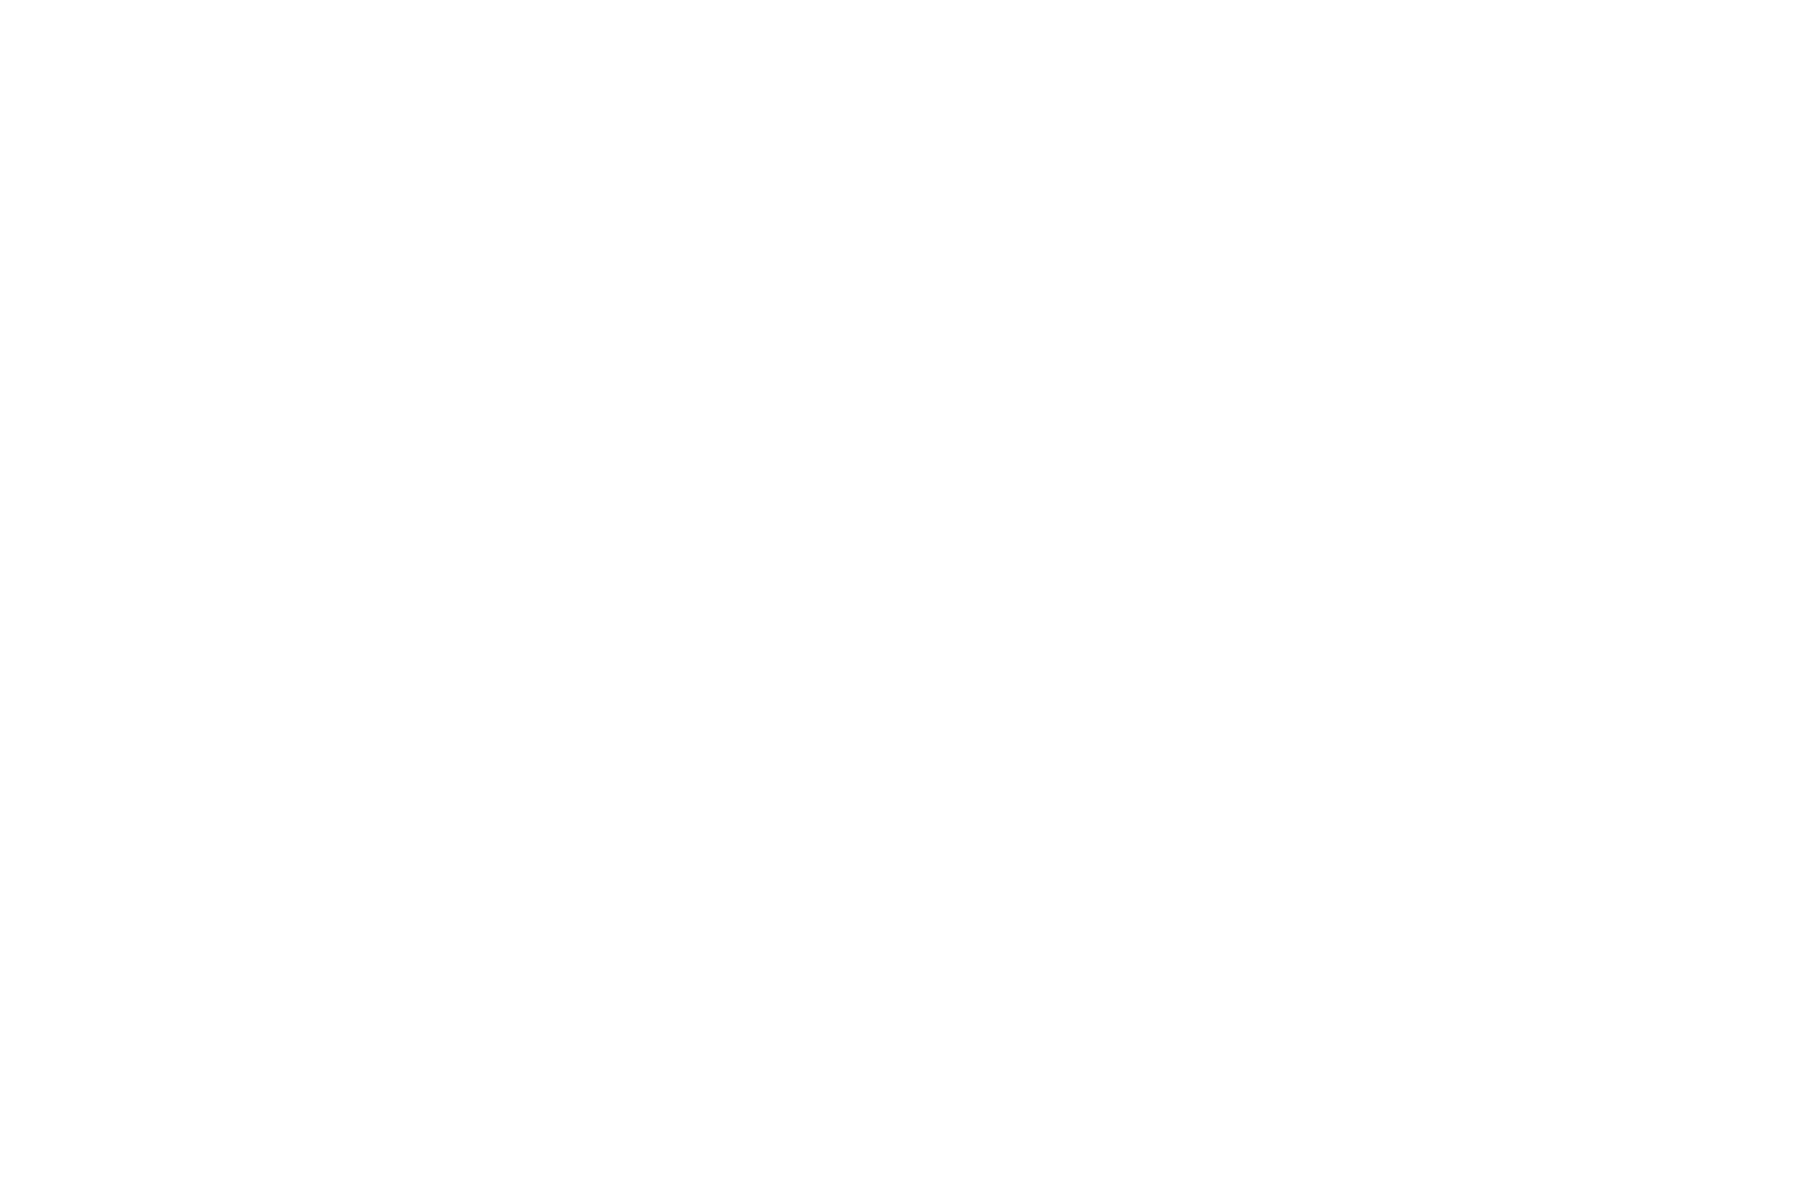 Ross Seaborn